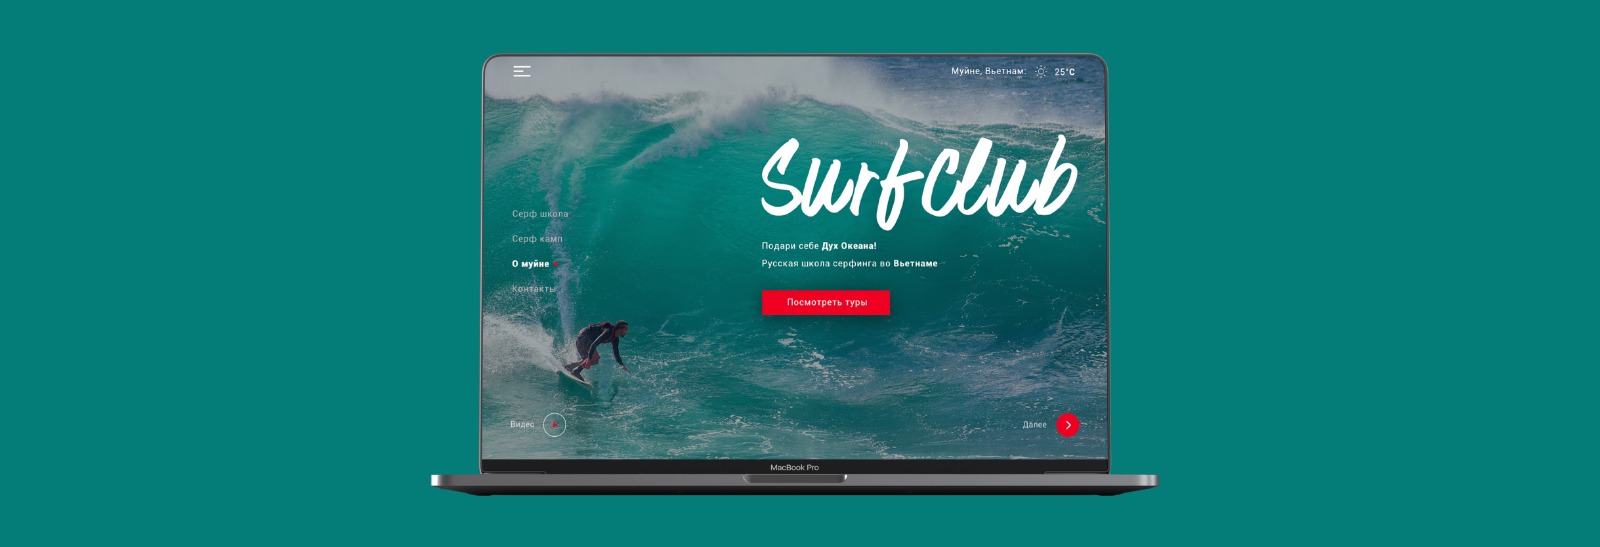 Website concept for surf school